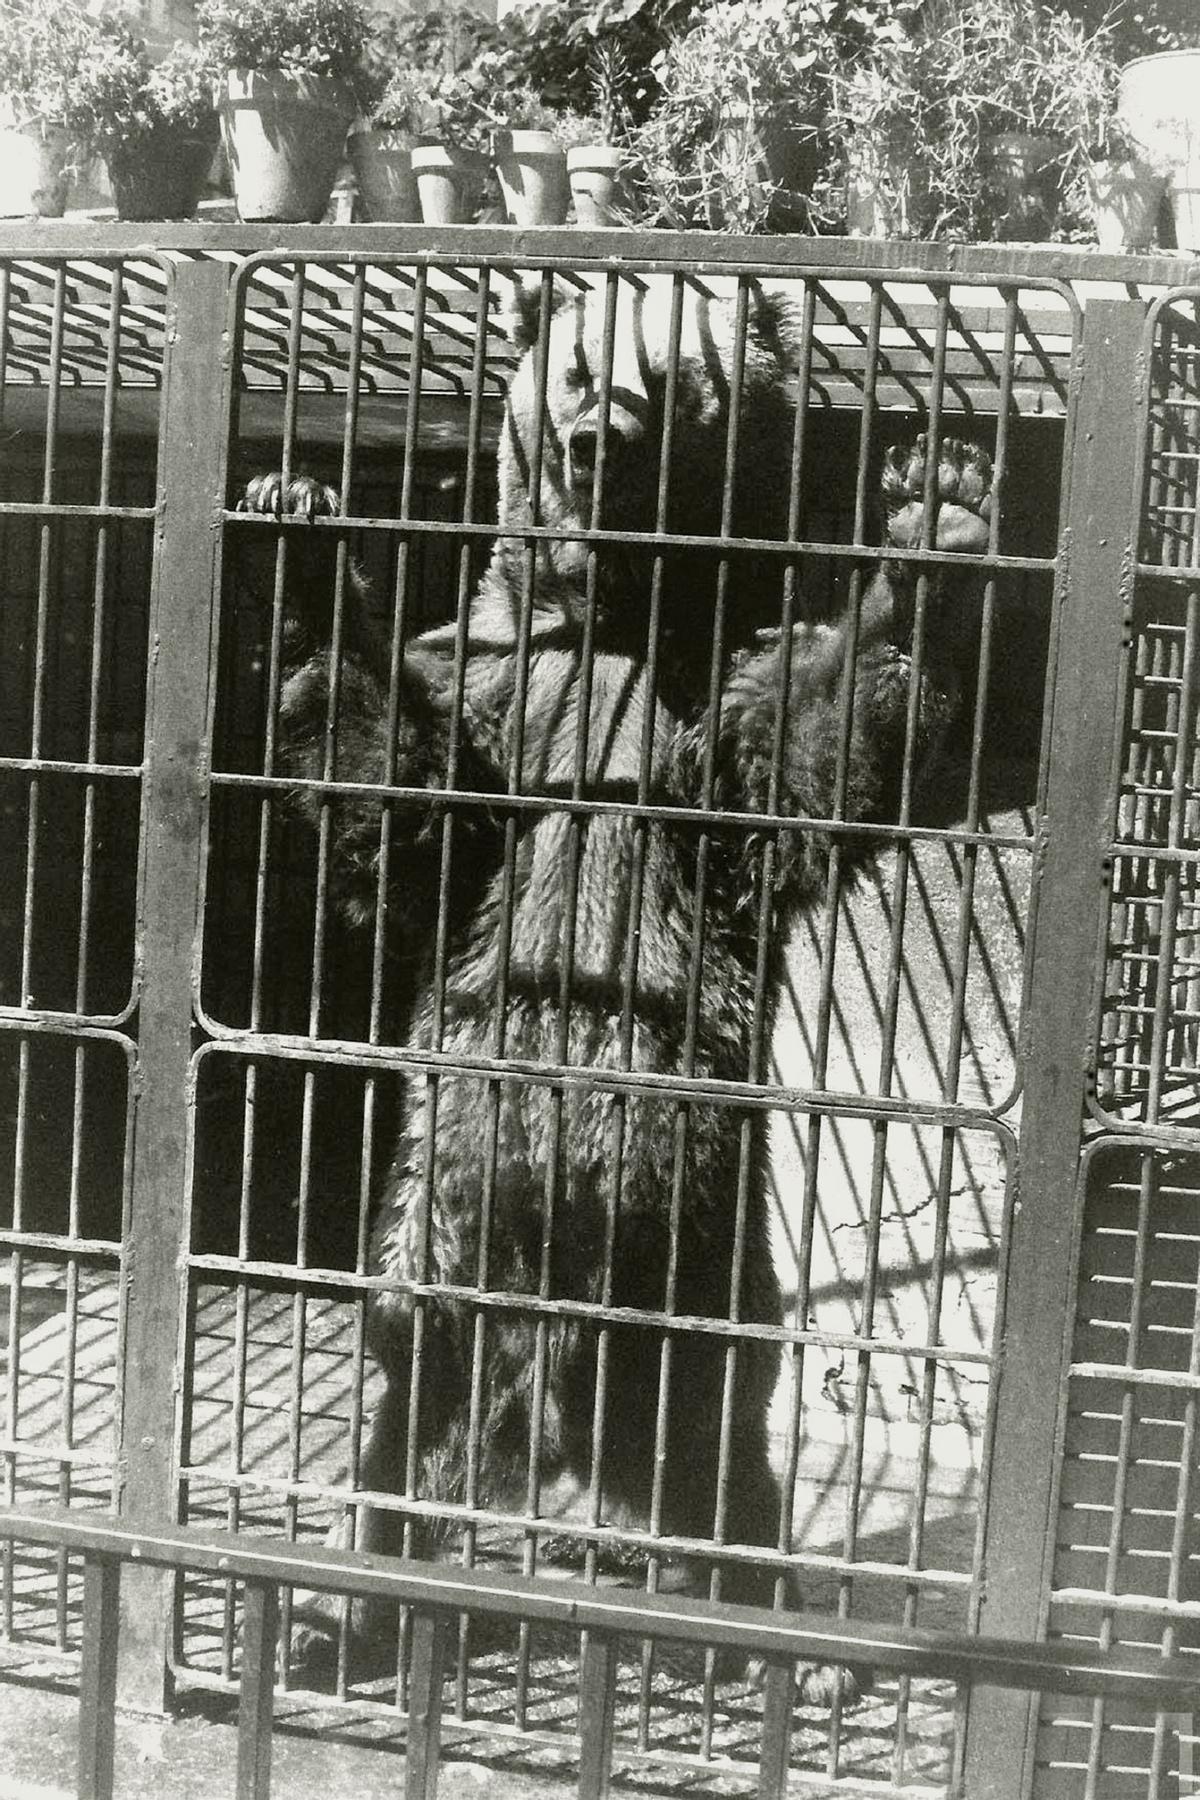 El oso Juan vivió en una jaula hasta que lo mataron.